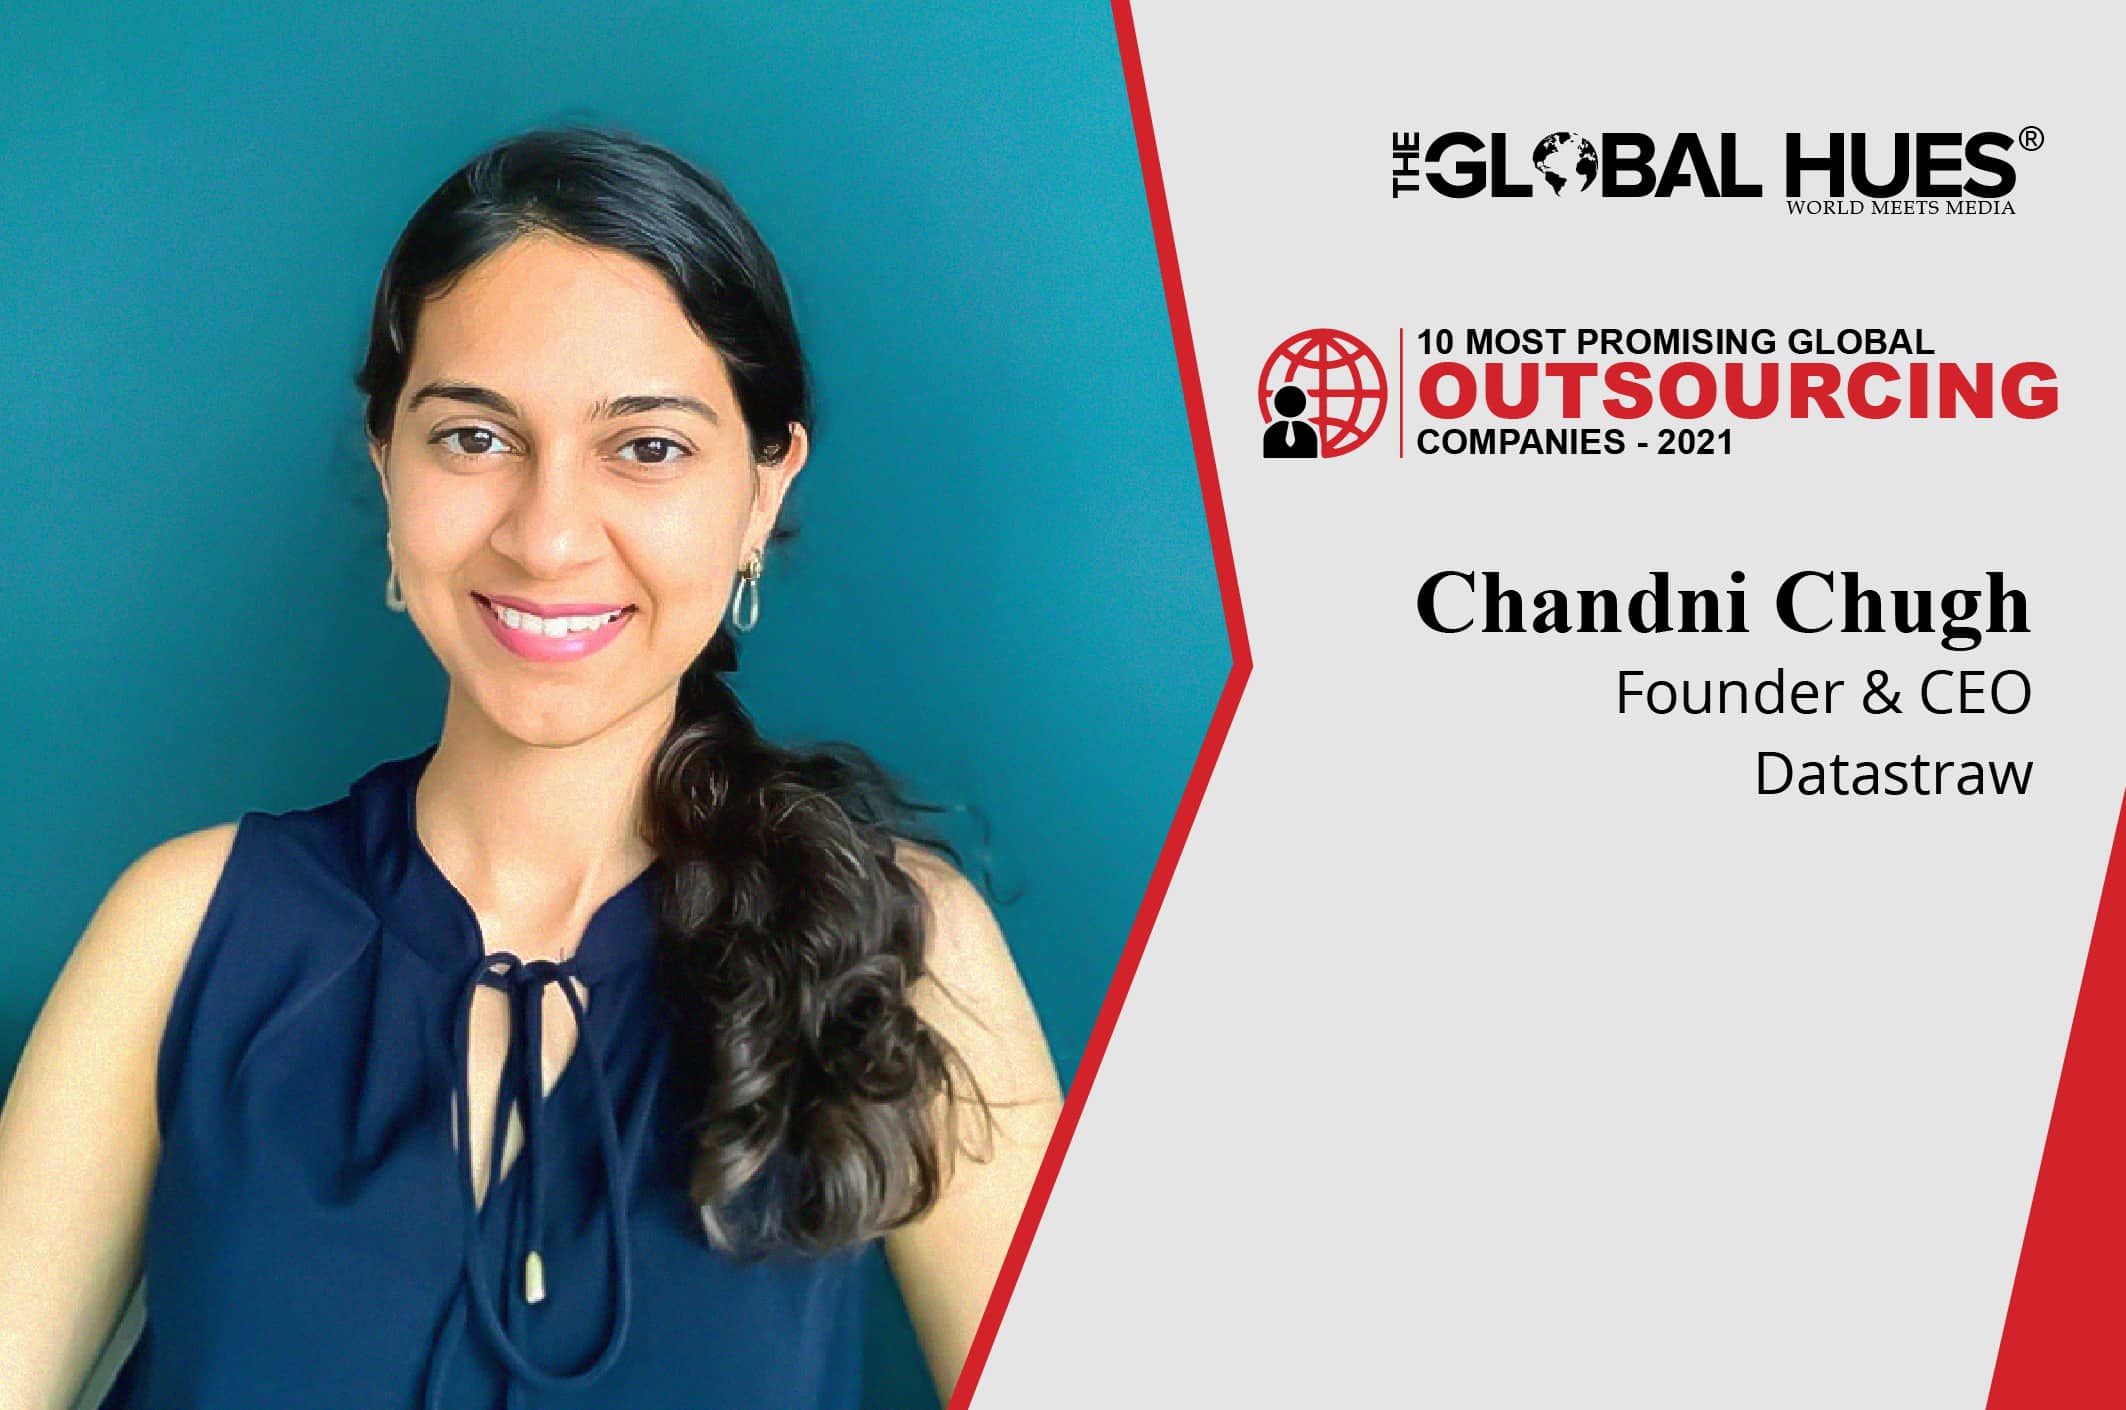 Chandini chugh CEO Datastraw